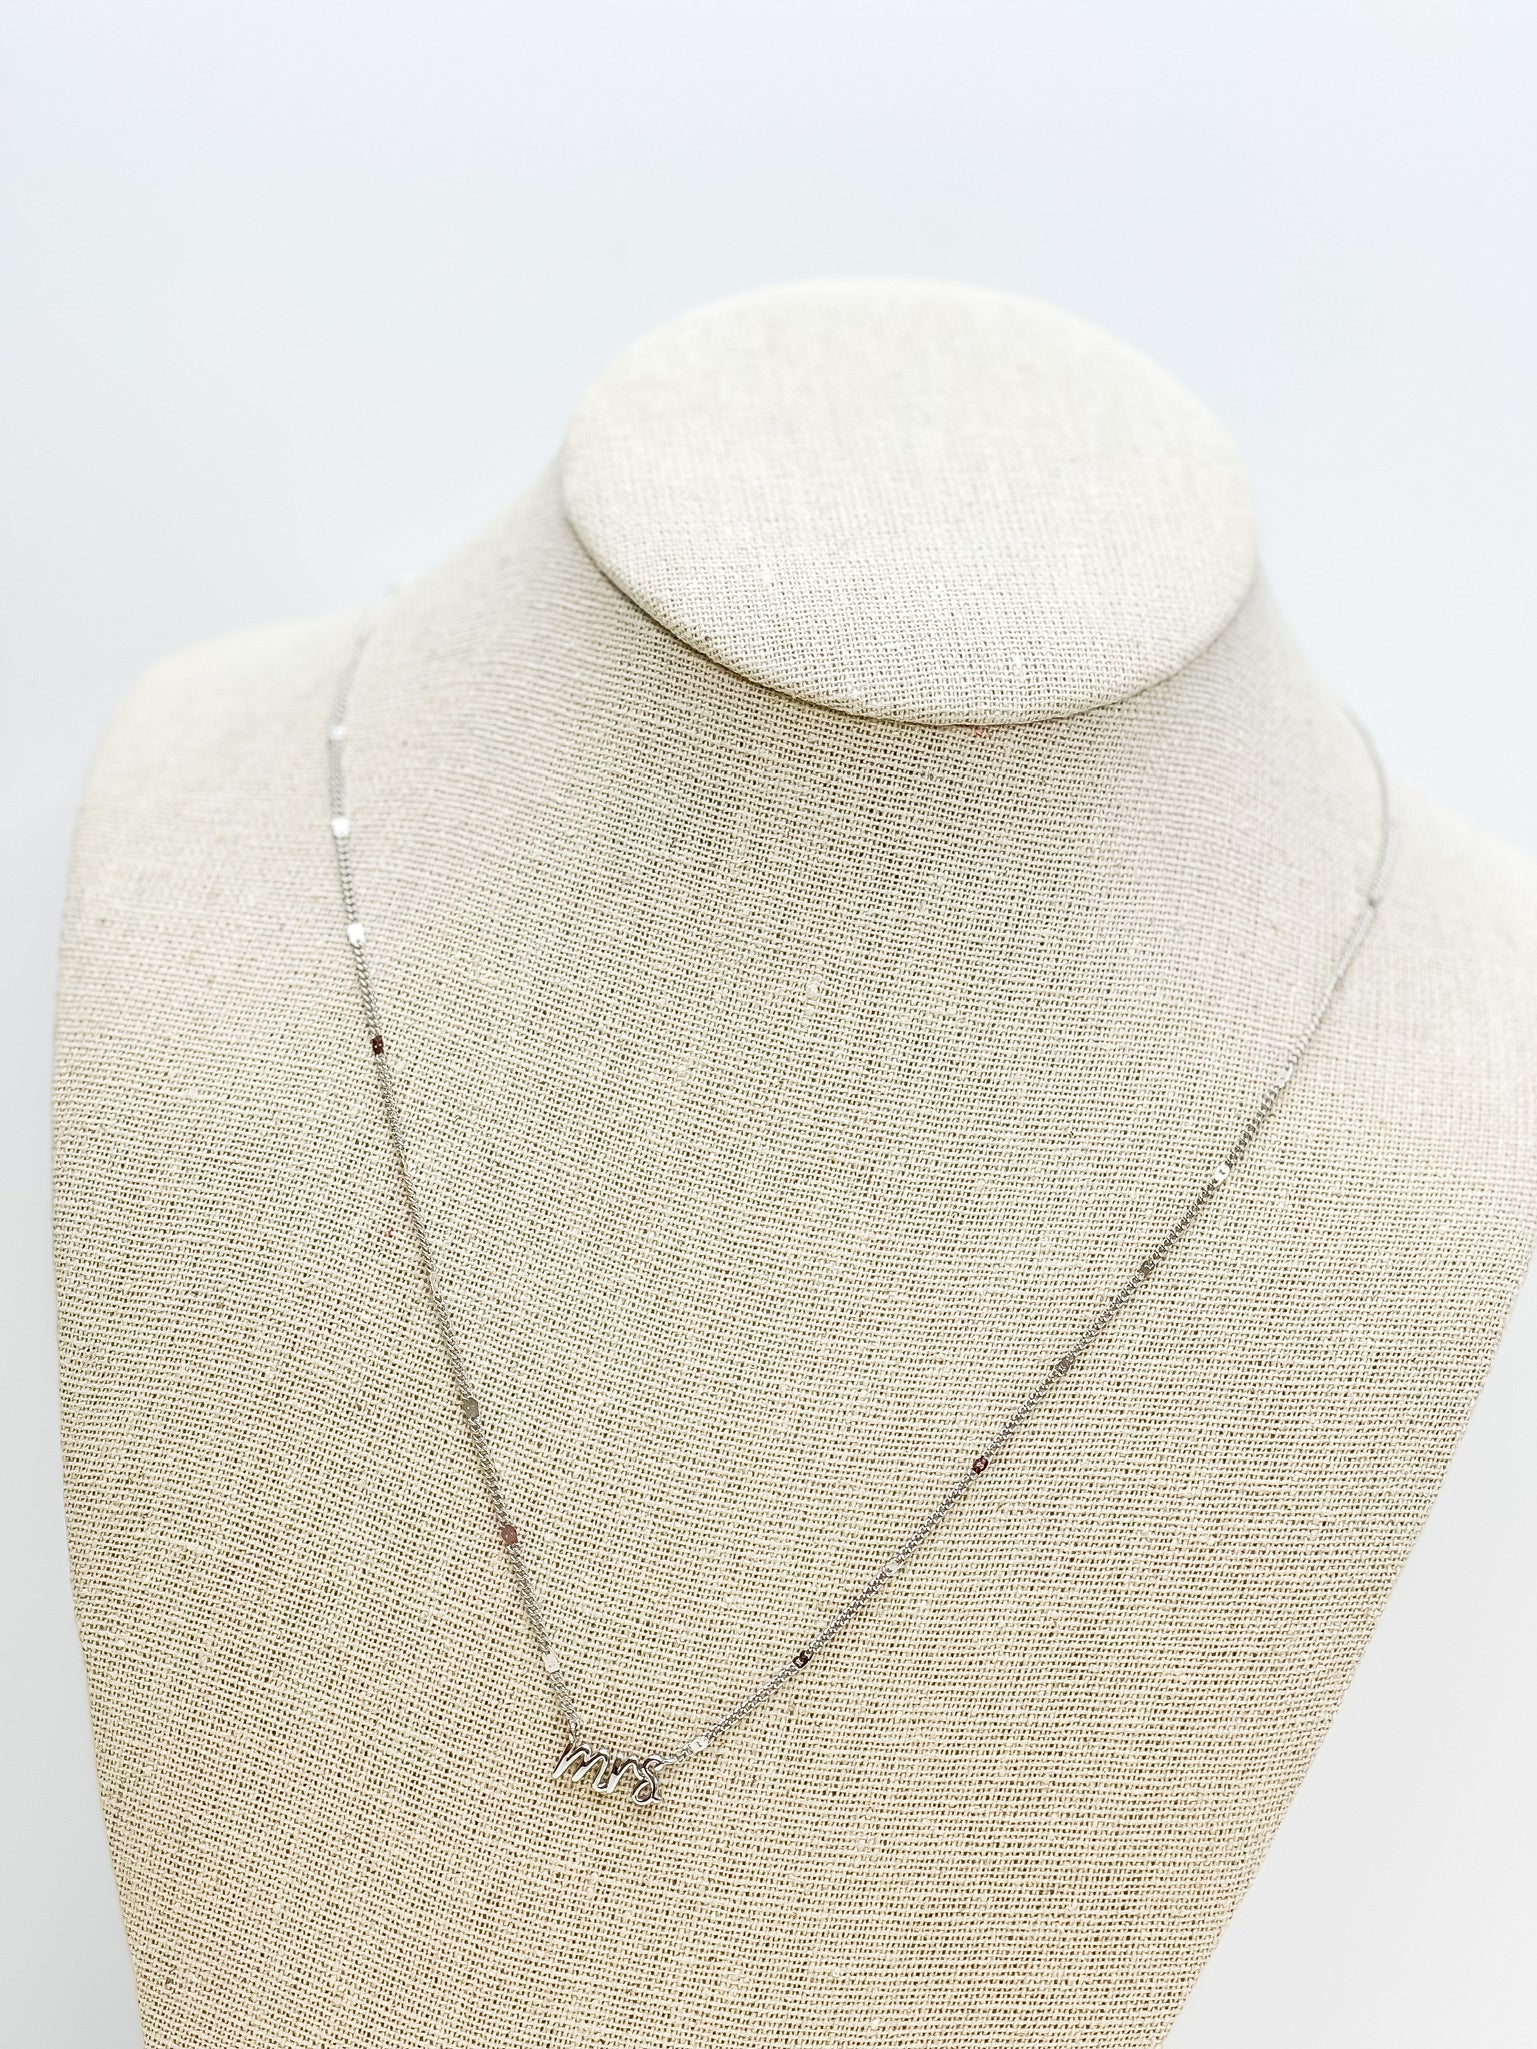 'Mrs' Pendant Necklace - Silver